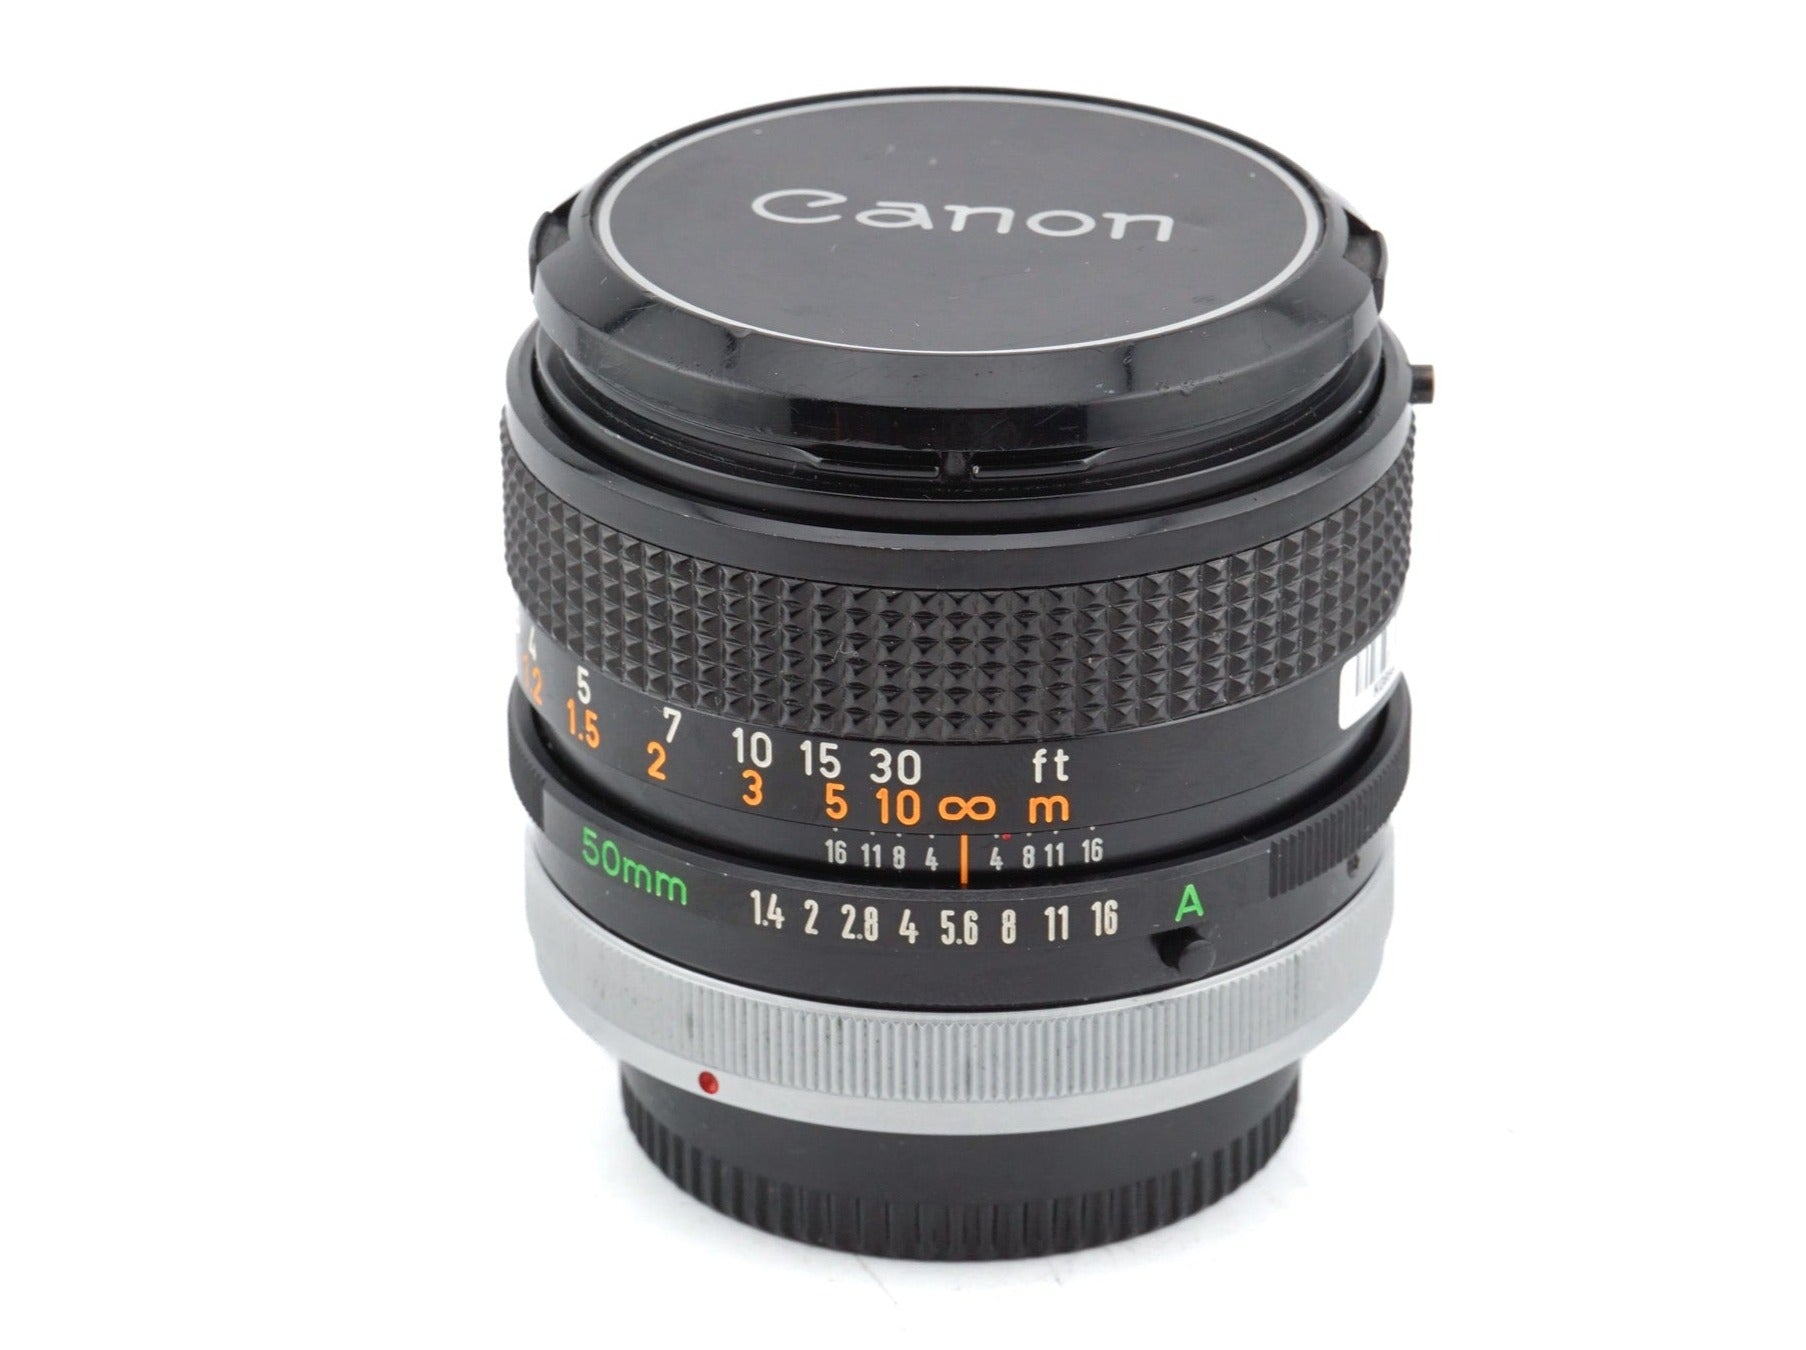 Canon 50mm f1.4 S.S.C. Lens